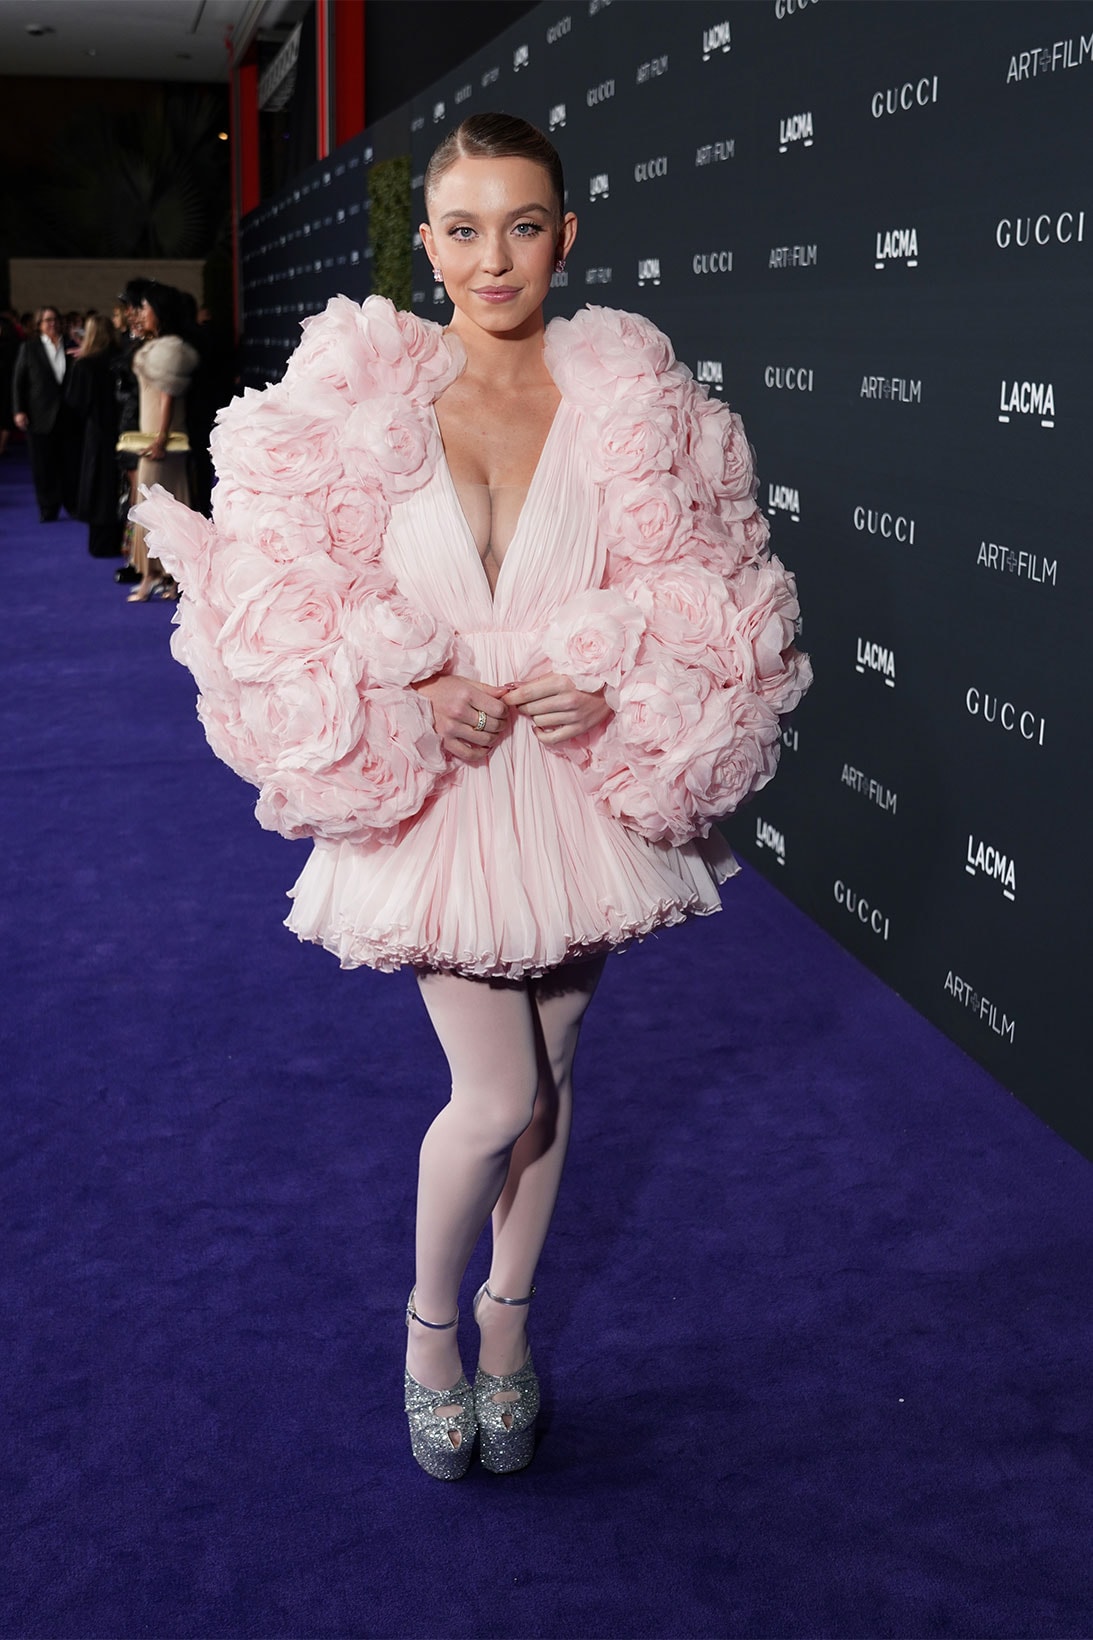 LACMA Art Film Gala Gucci Best Dressed Celebrities Kim Kardashian Billie Eilish Kendall Jenner Rose BLACKPINK Images